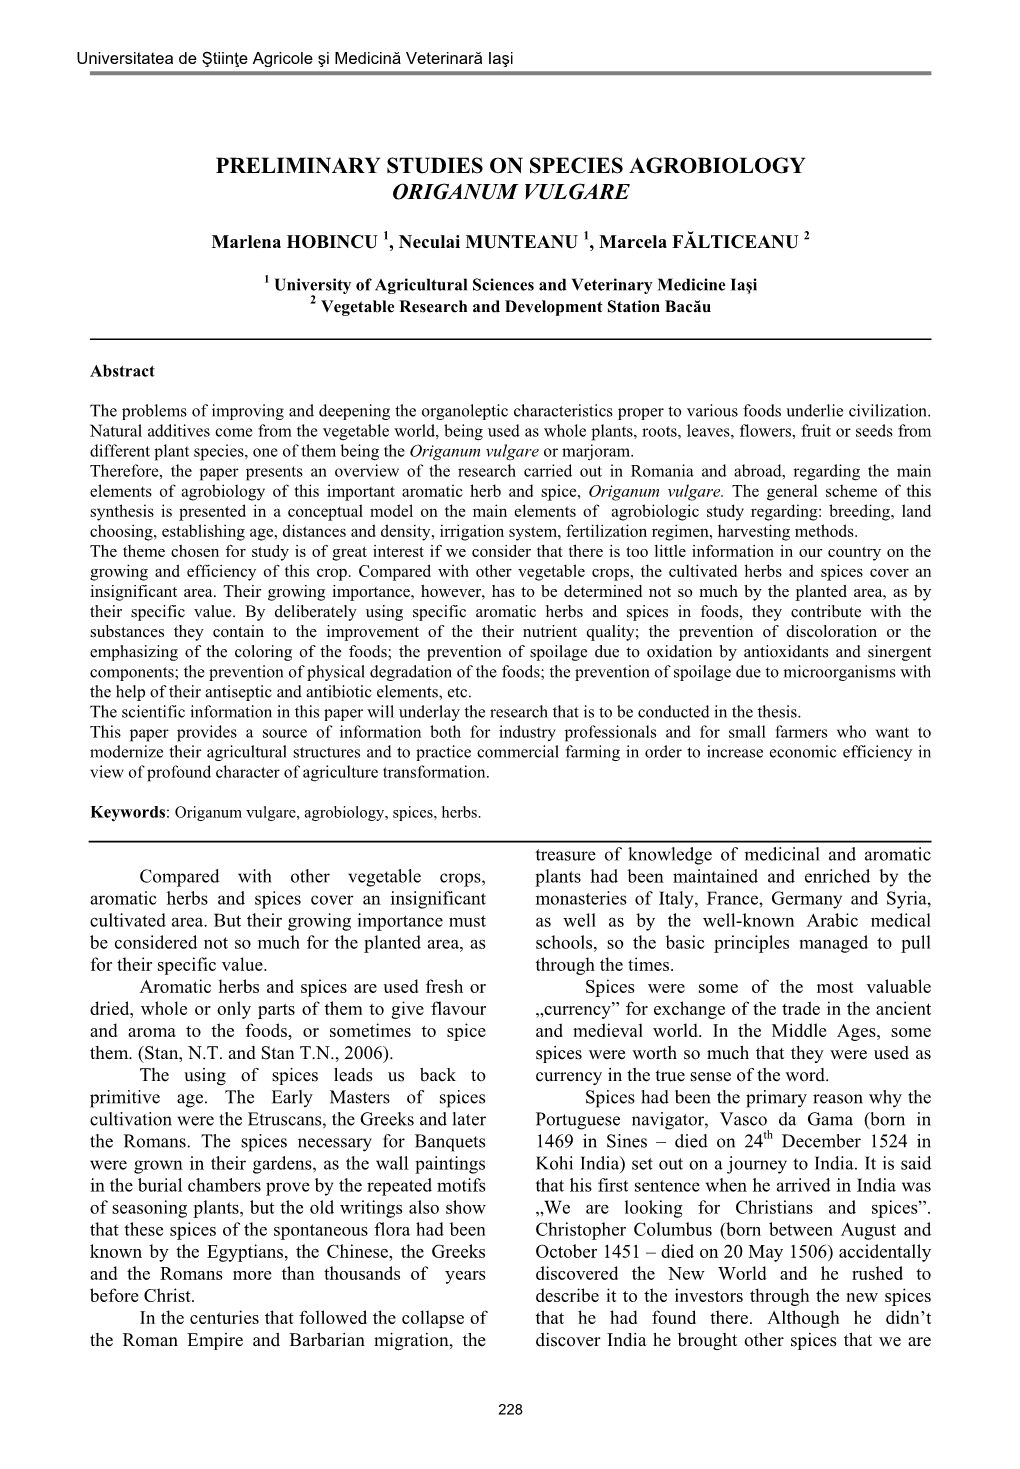 Preliminary Studies on Species Agrobiology Origanum Vulgare